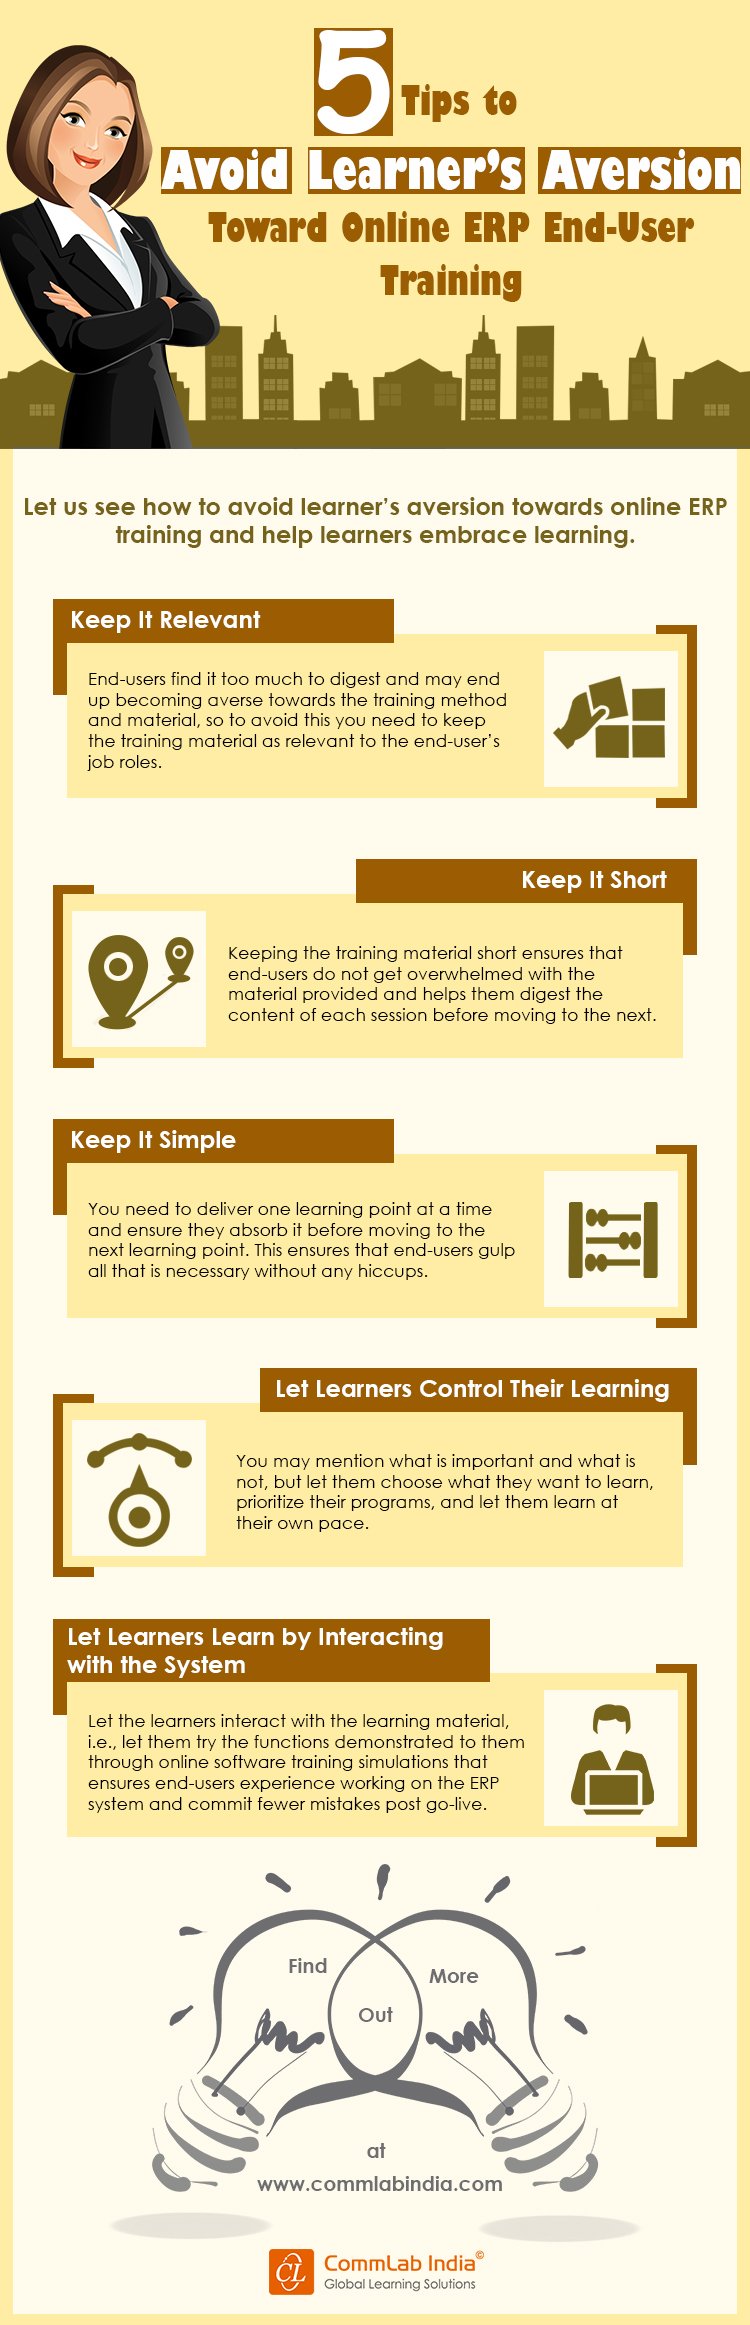 5 Tips to Avoid ERP End-user Training Learner Aversion [Infographic]